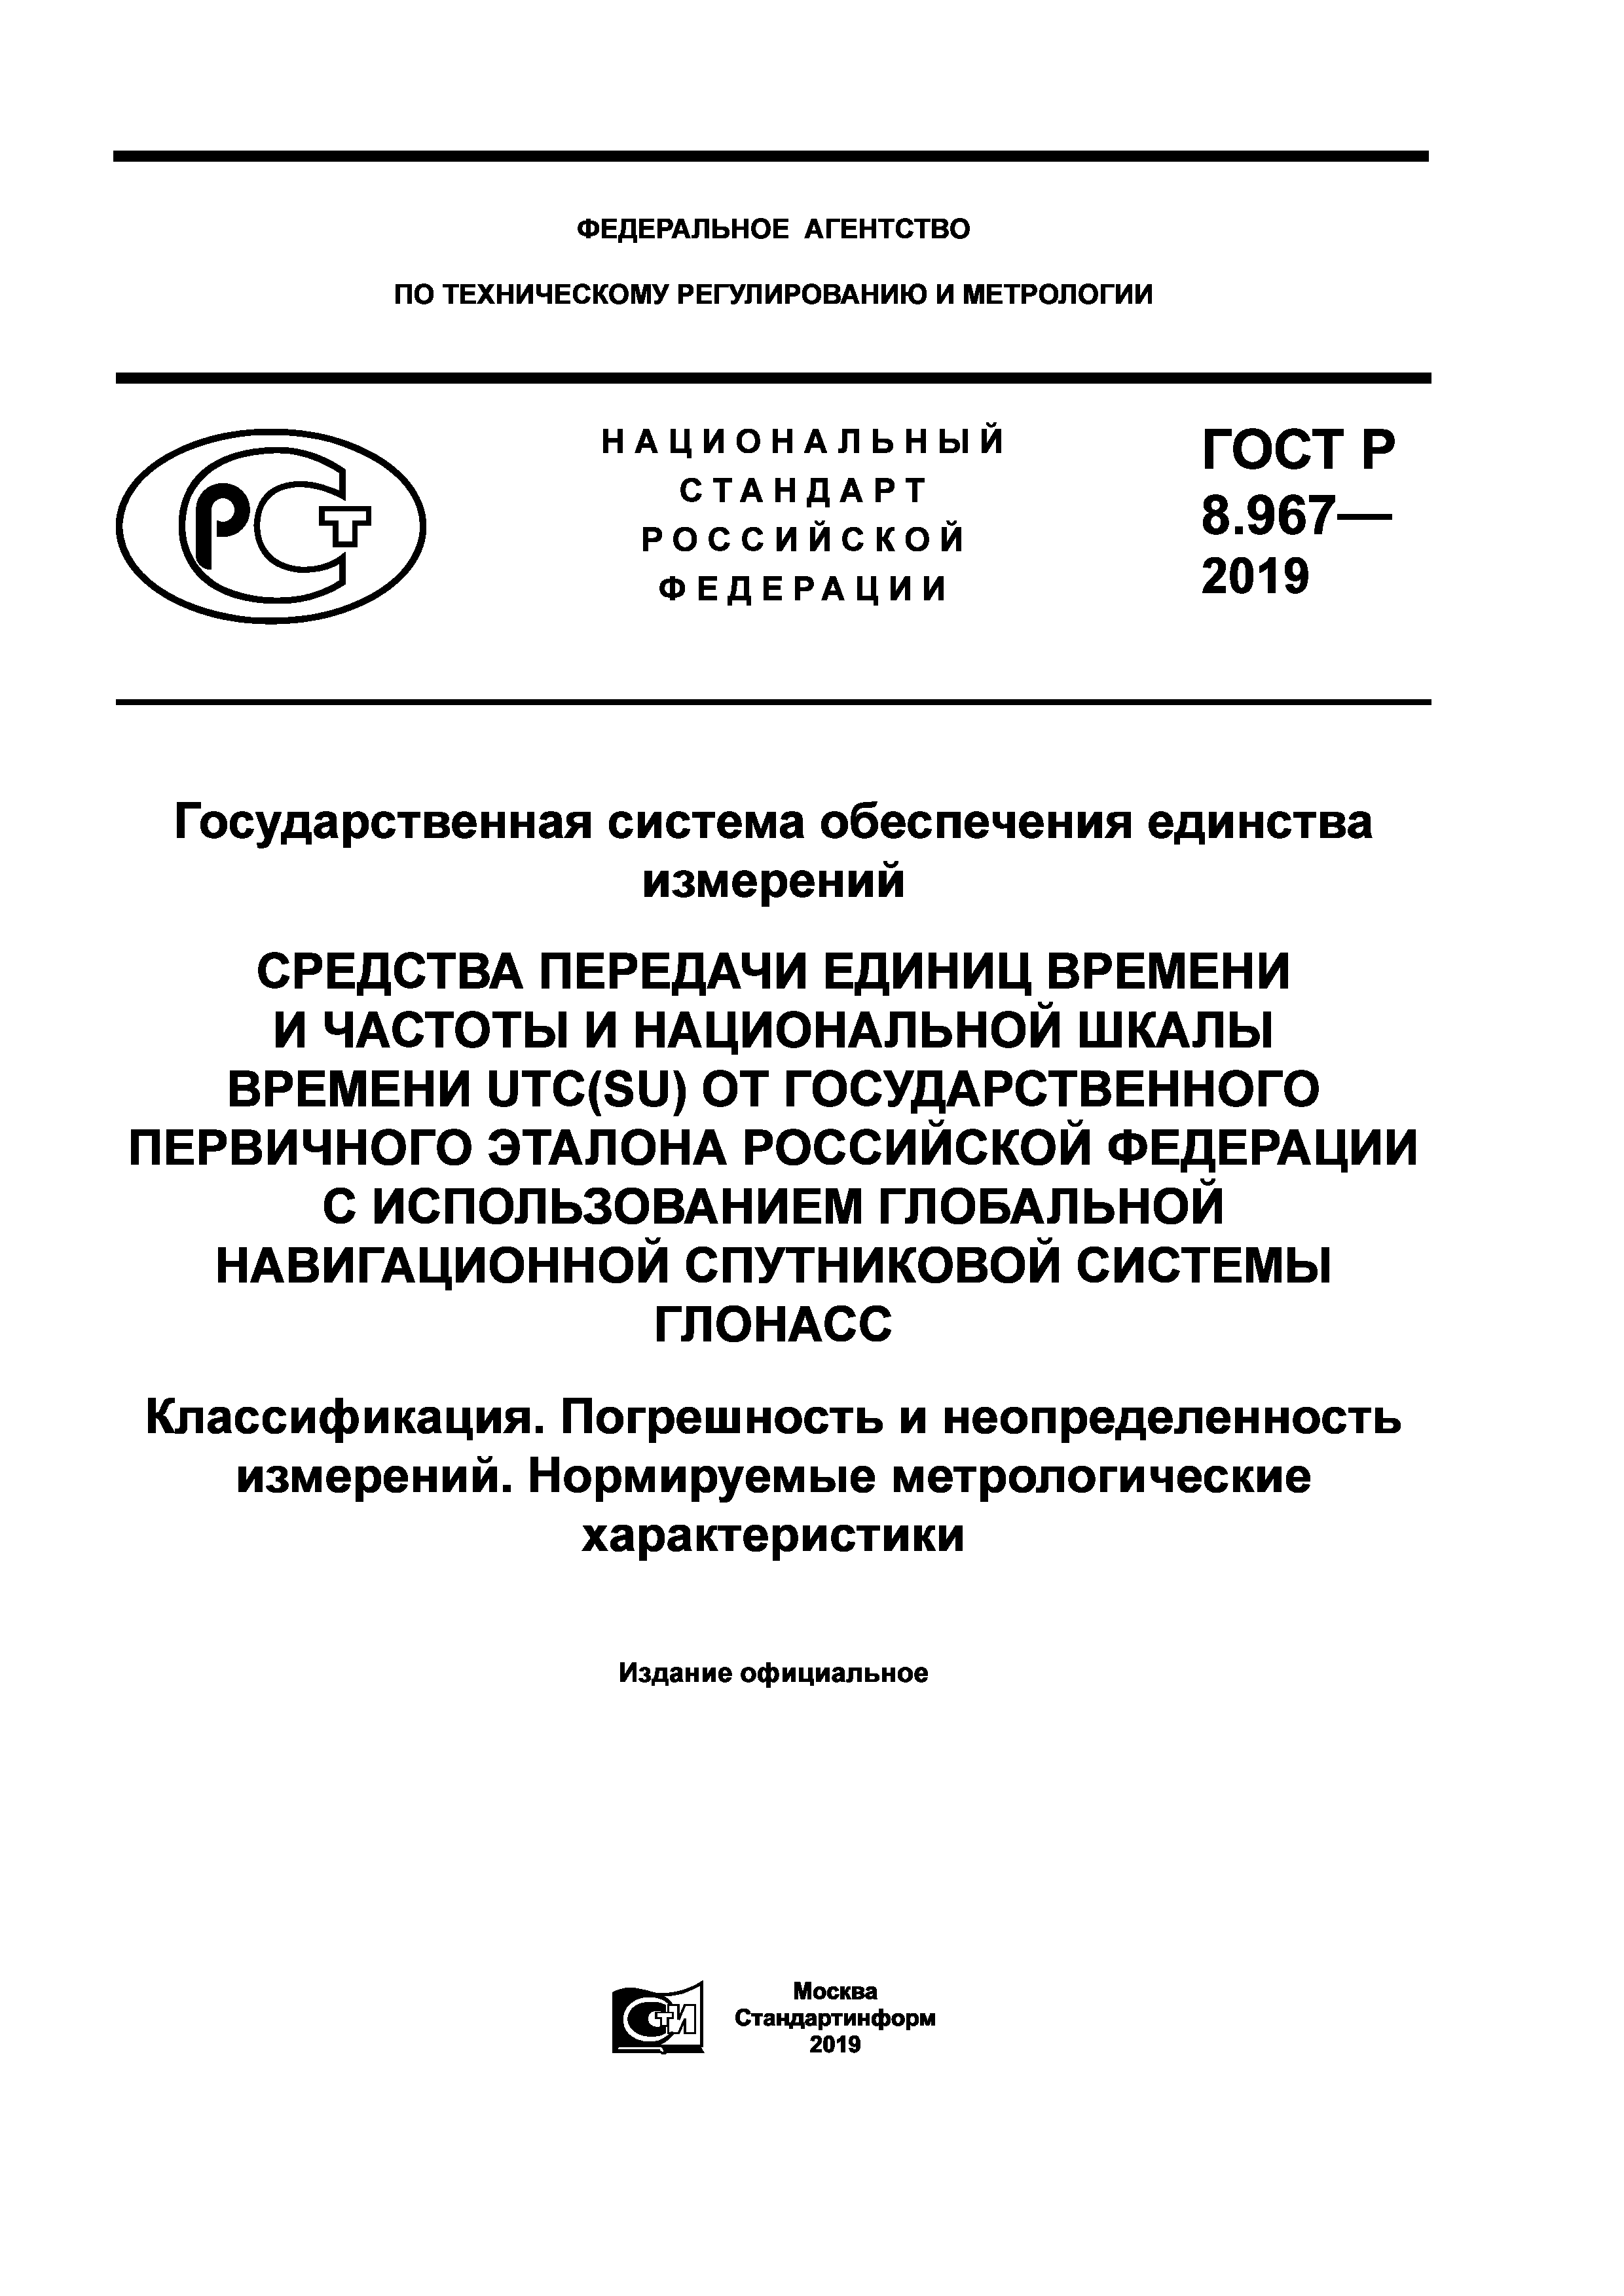 ГОСТ Р 8.967-2019